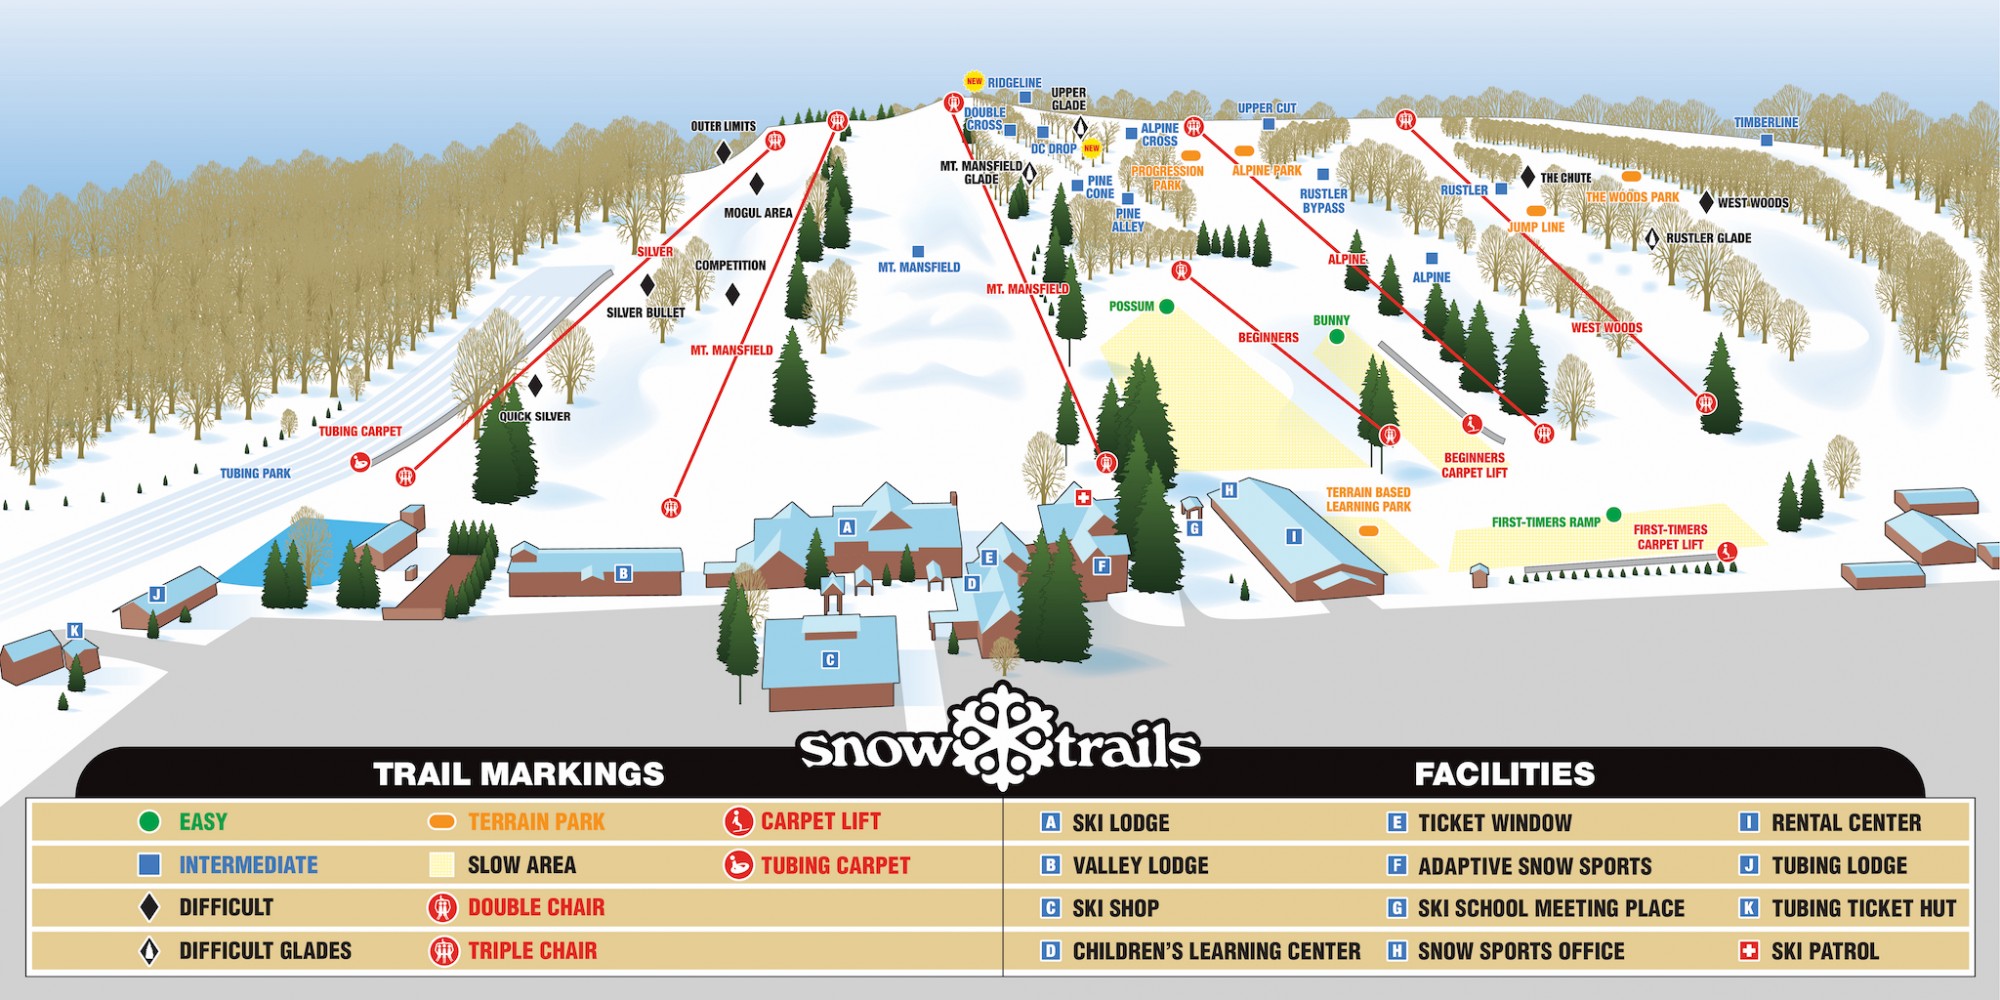 Snow Trails Map 2021-22